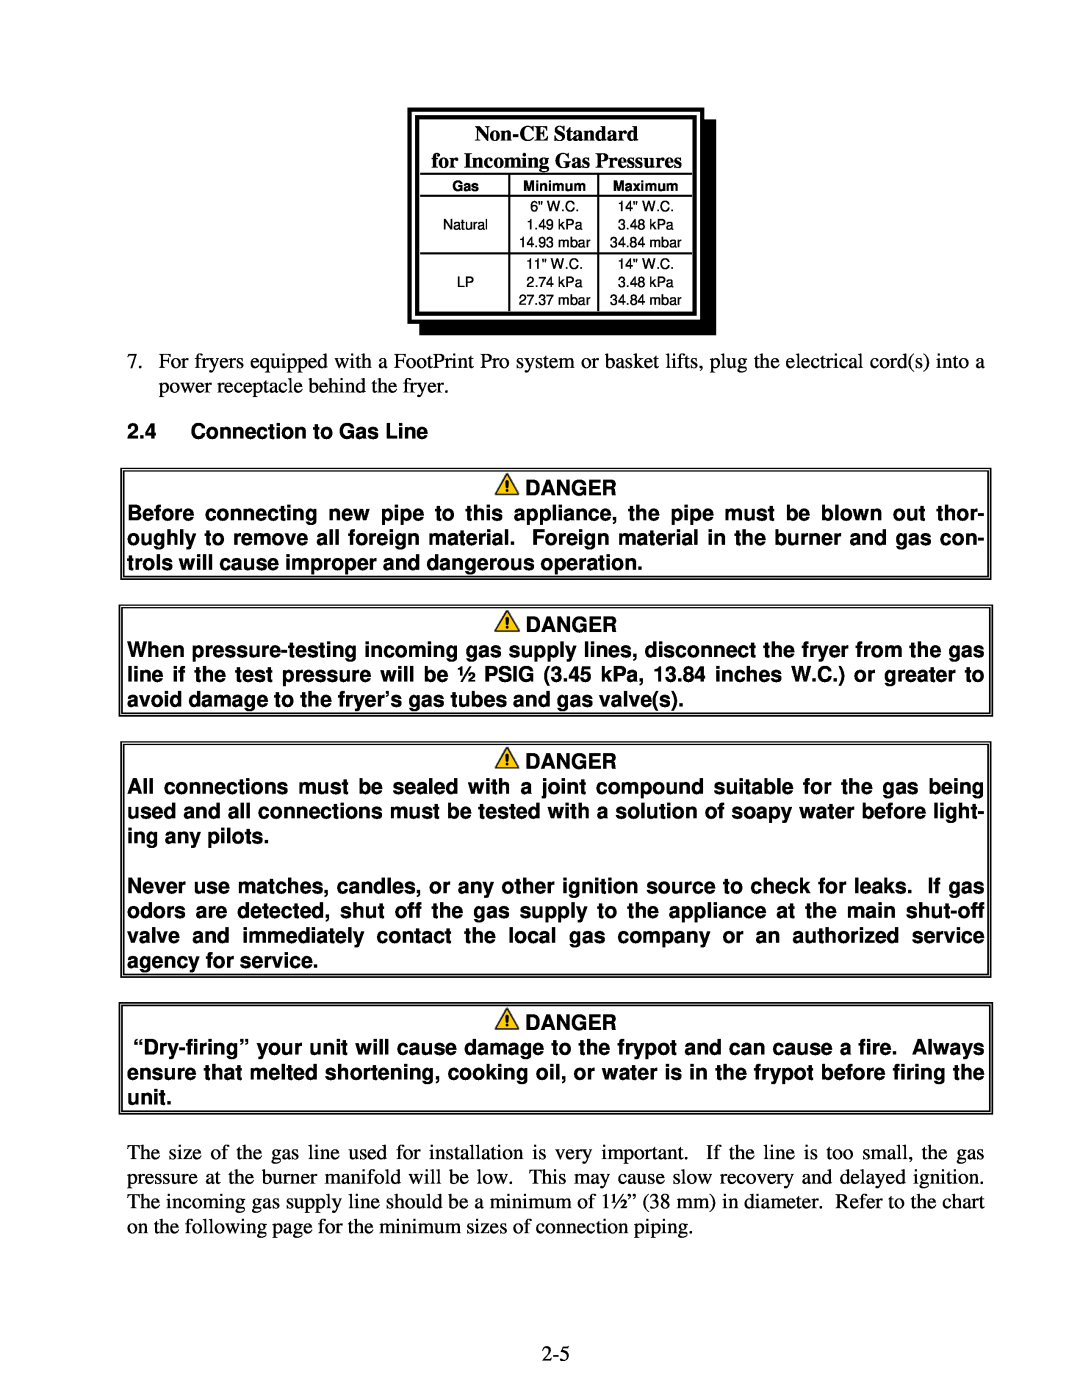 Frymaster H55 operation manual 2.4Connection to Gas Line DANGER, Danger 